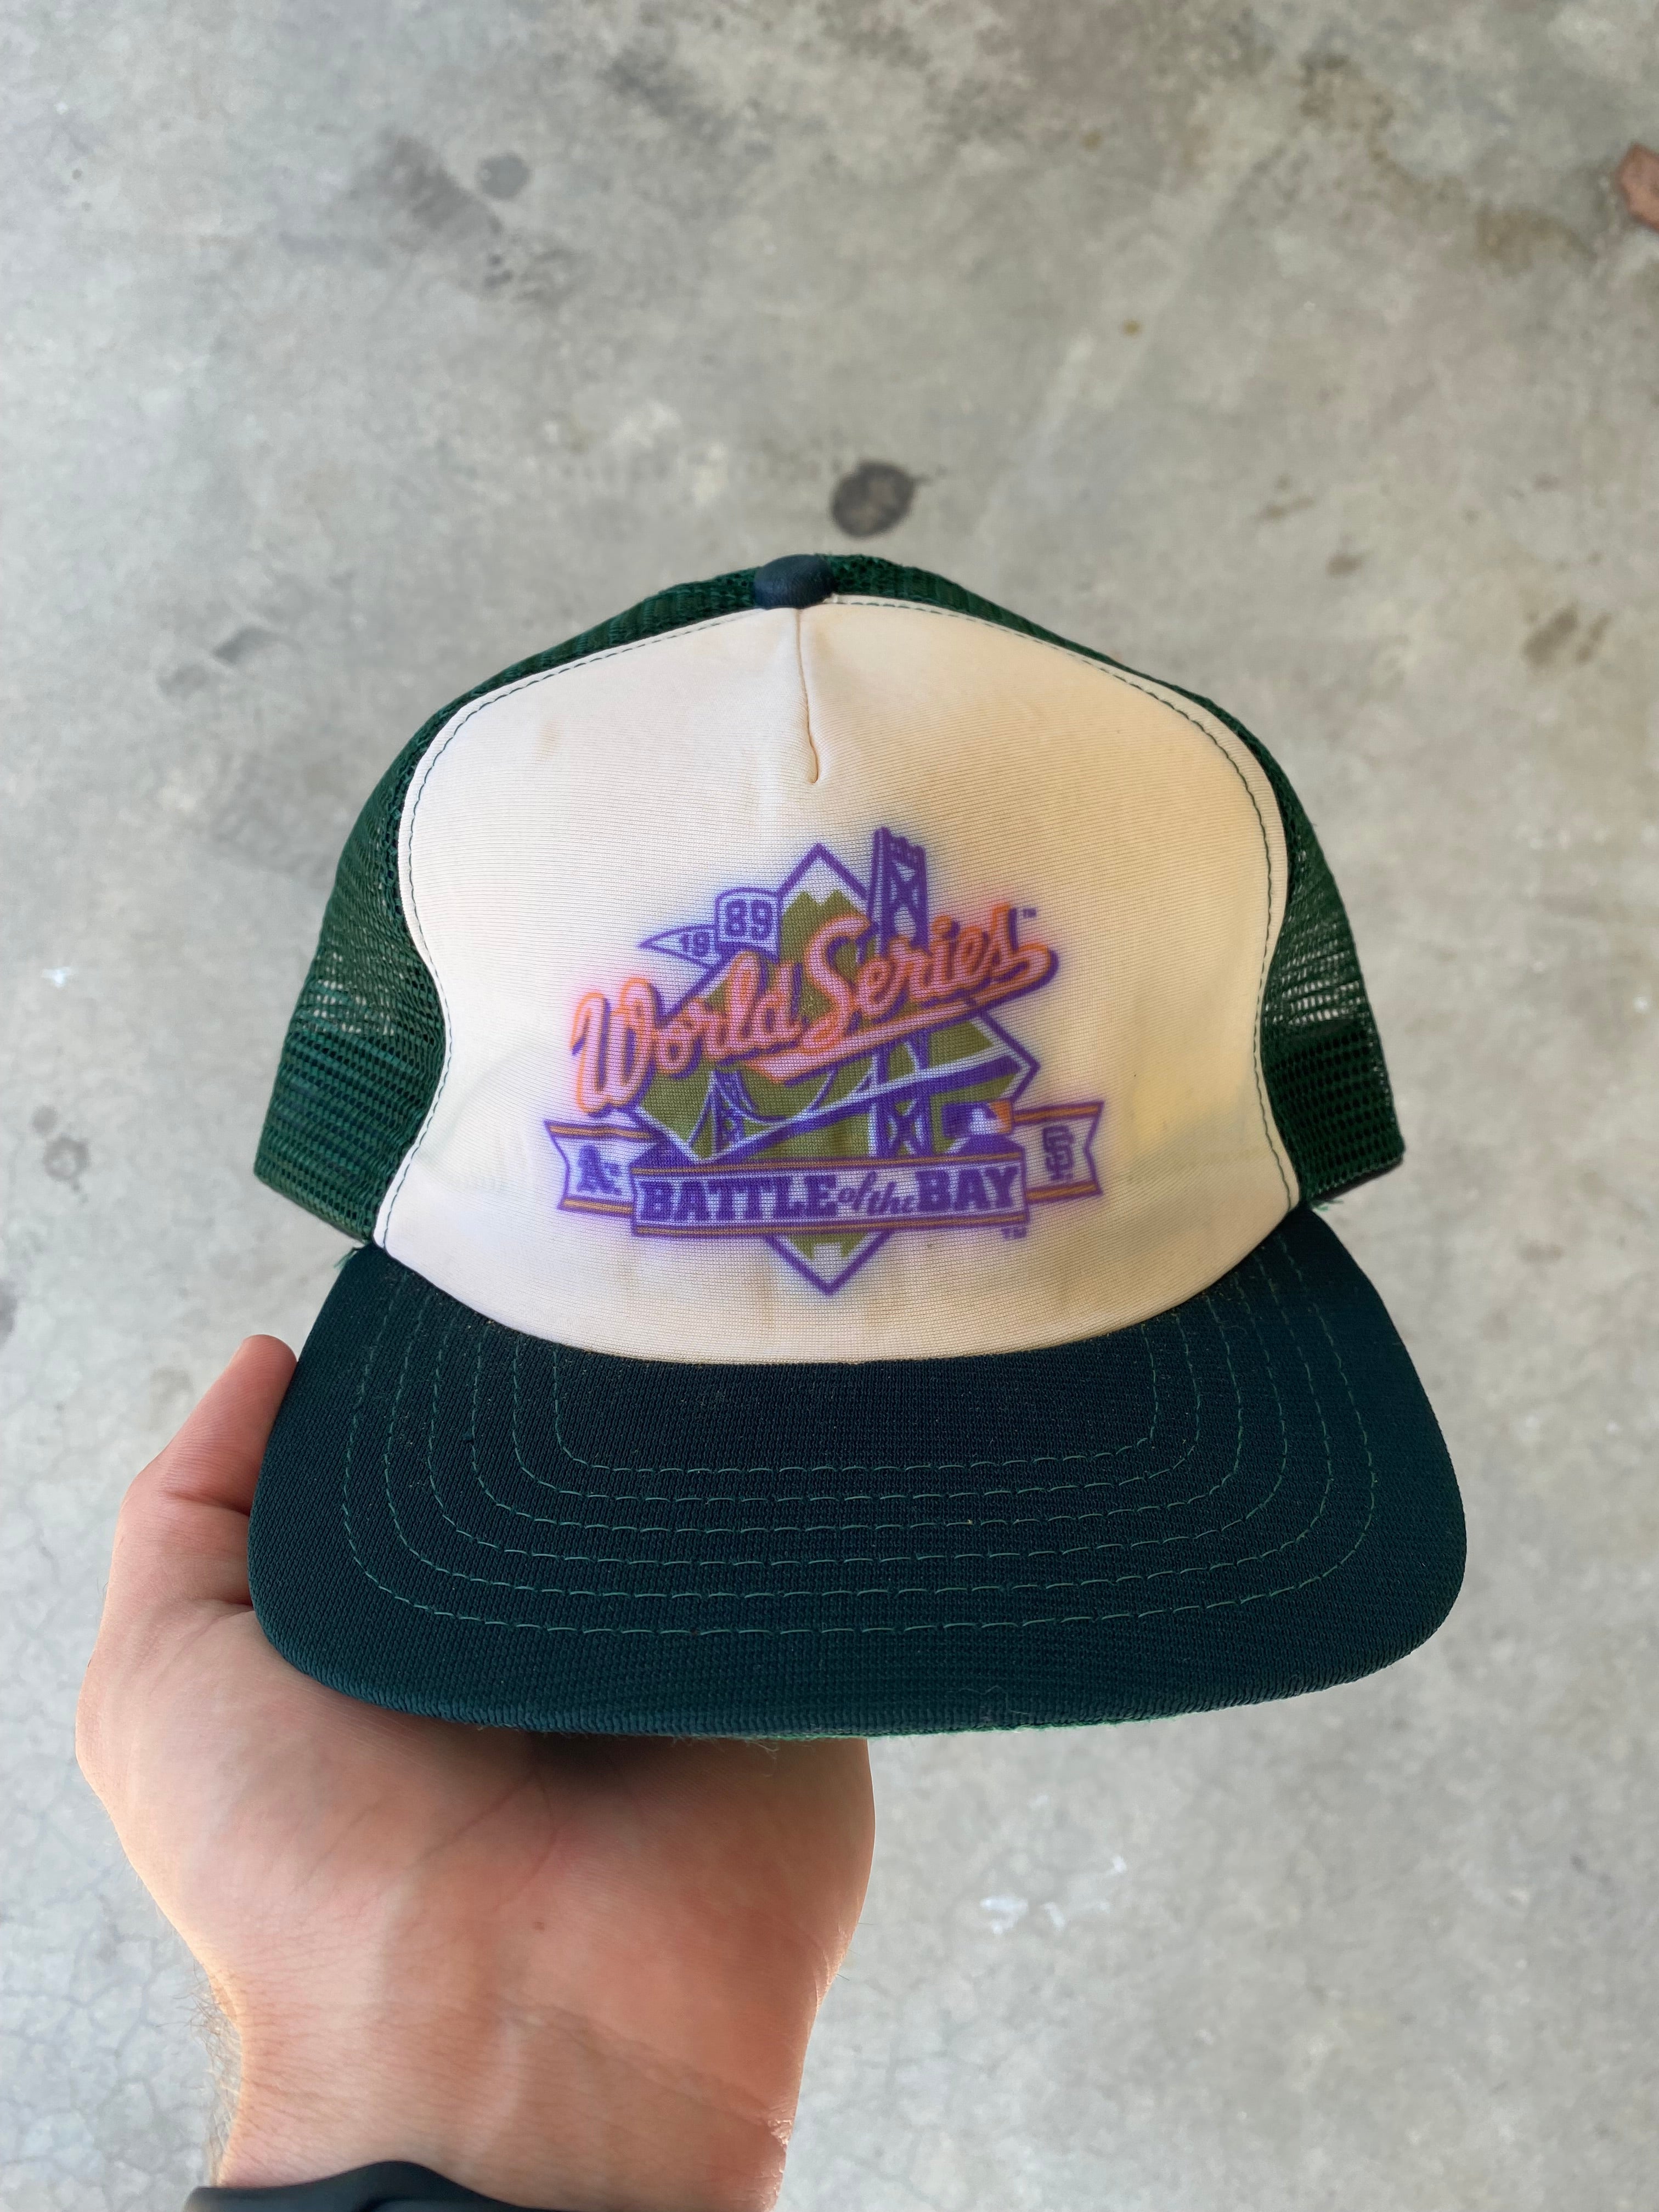 1989 Battle of the Bay World Series Trucker Hat